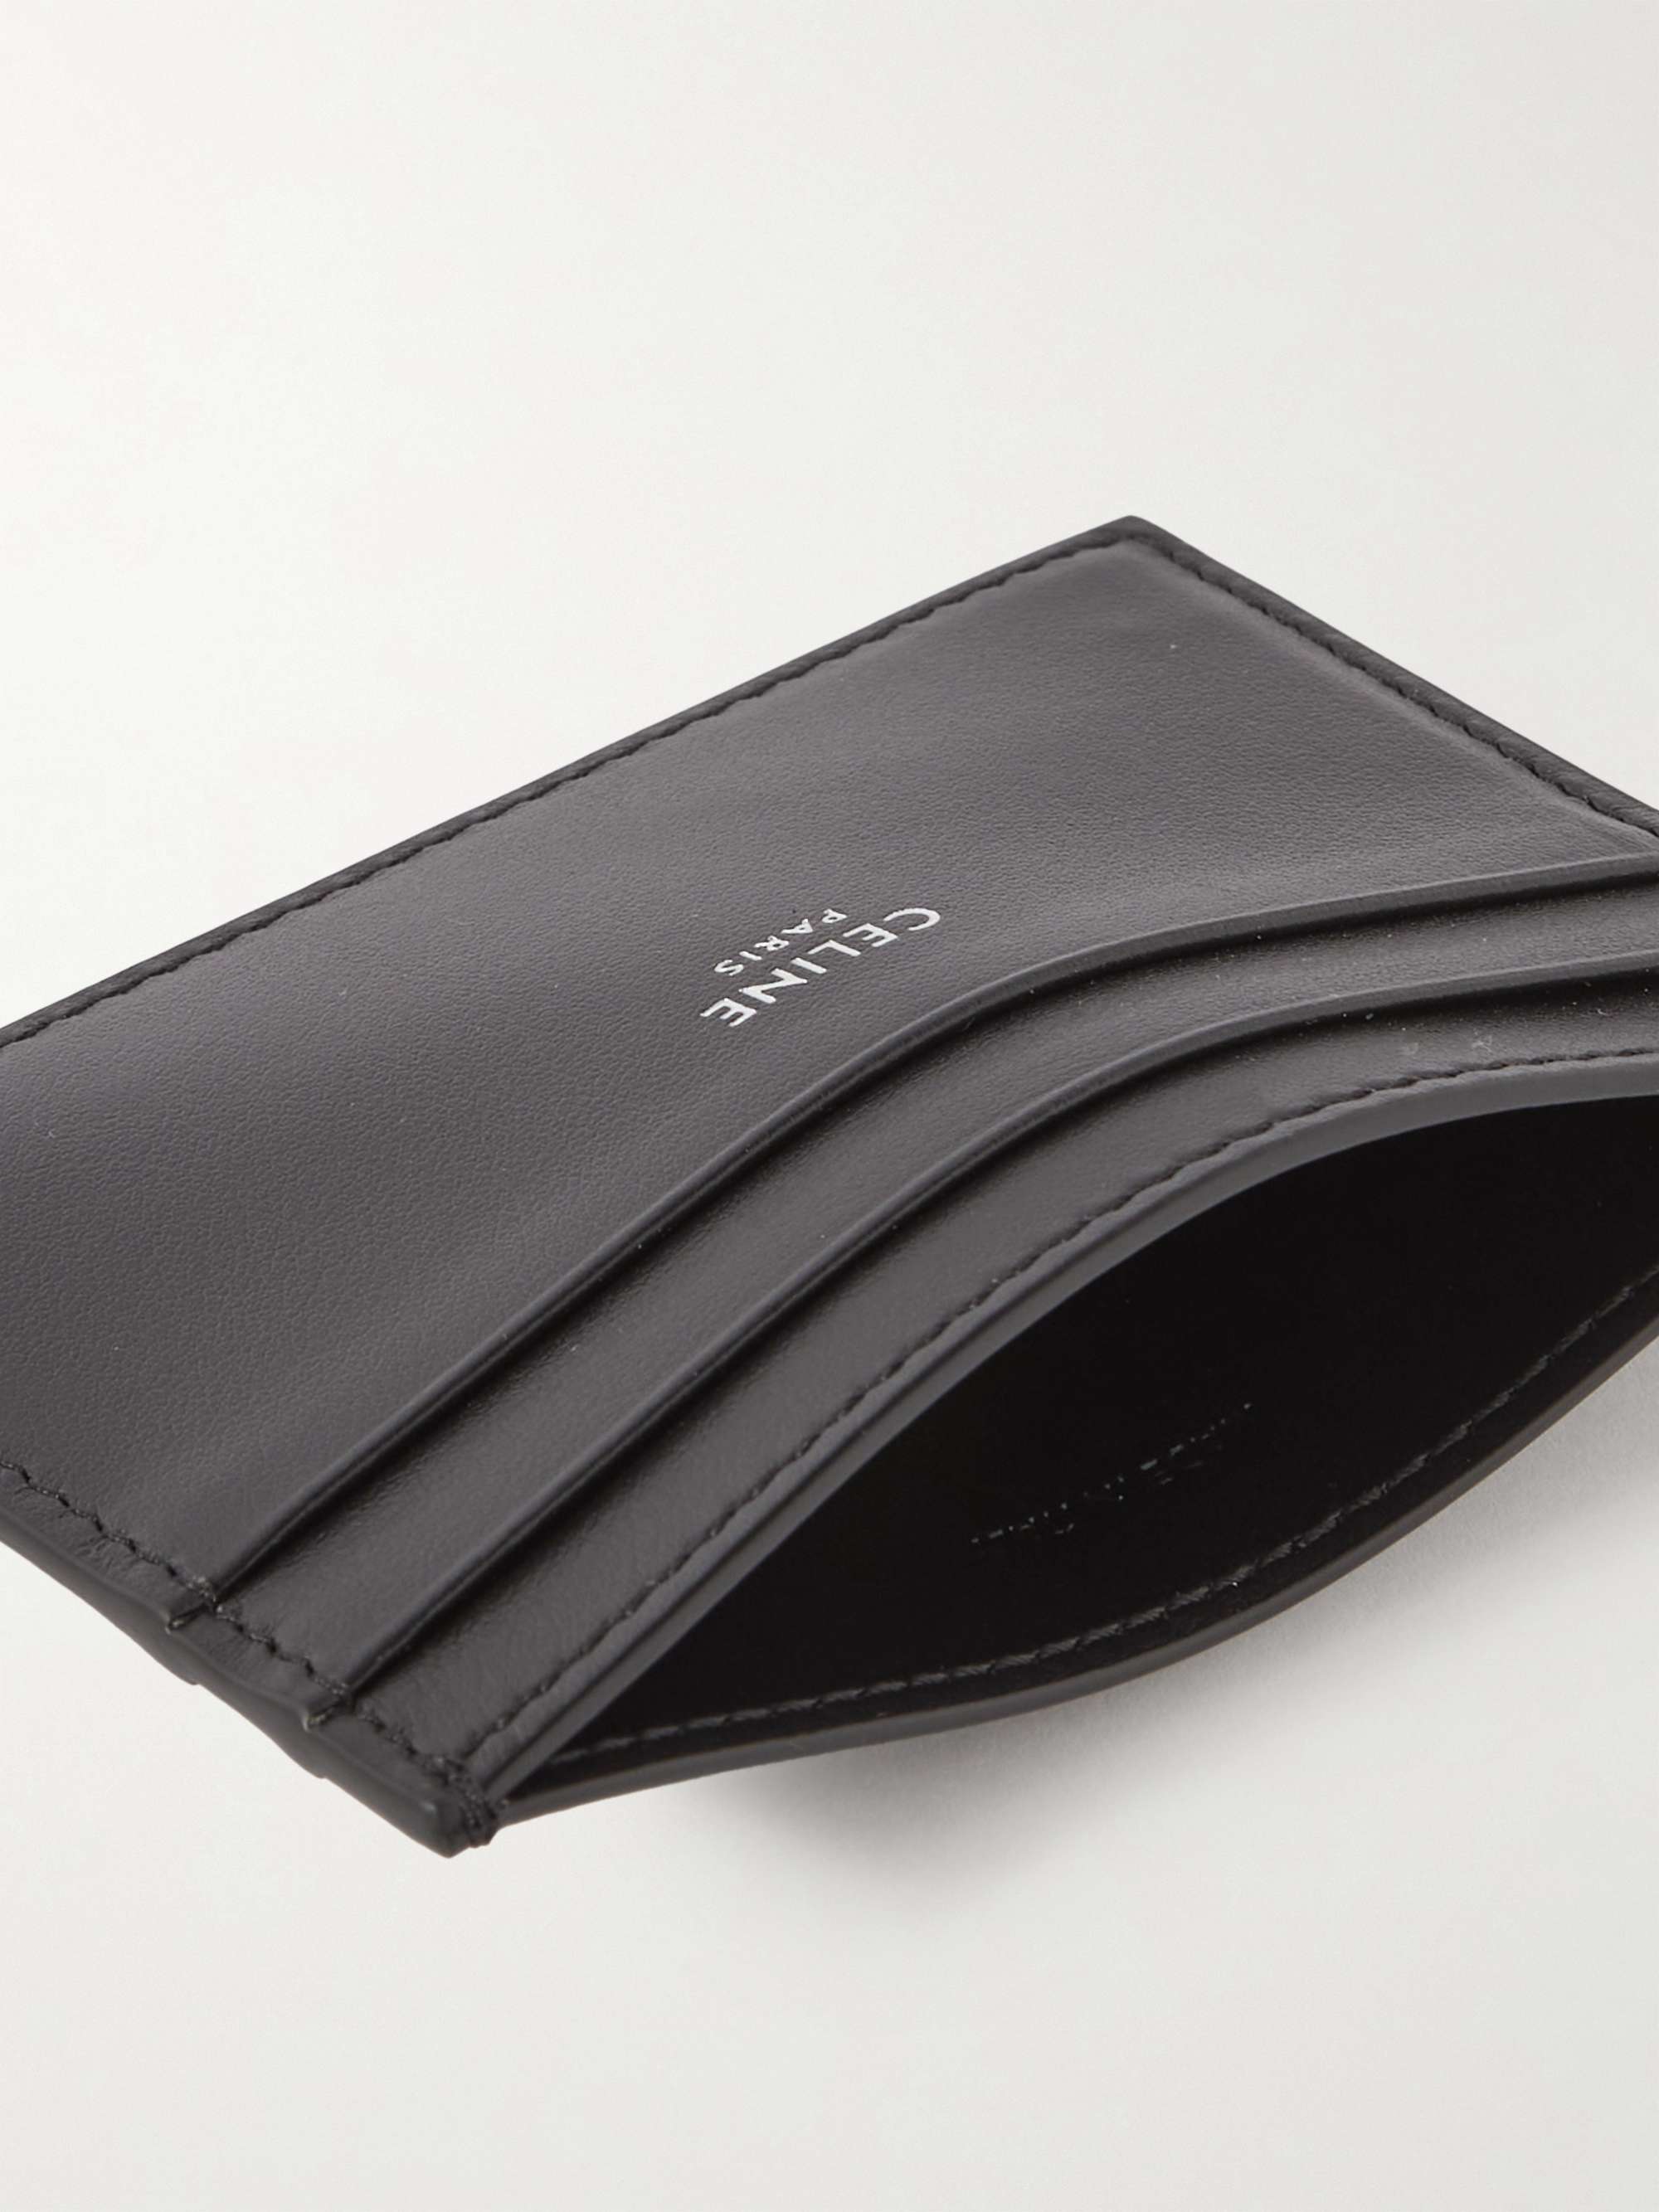 Celine Zip Around Leather Wallet